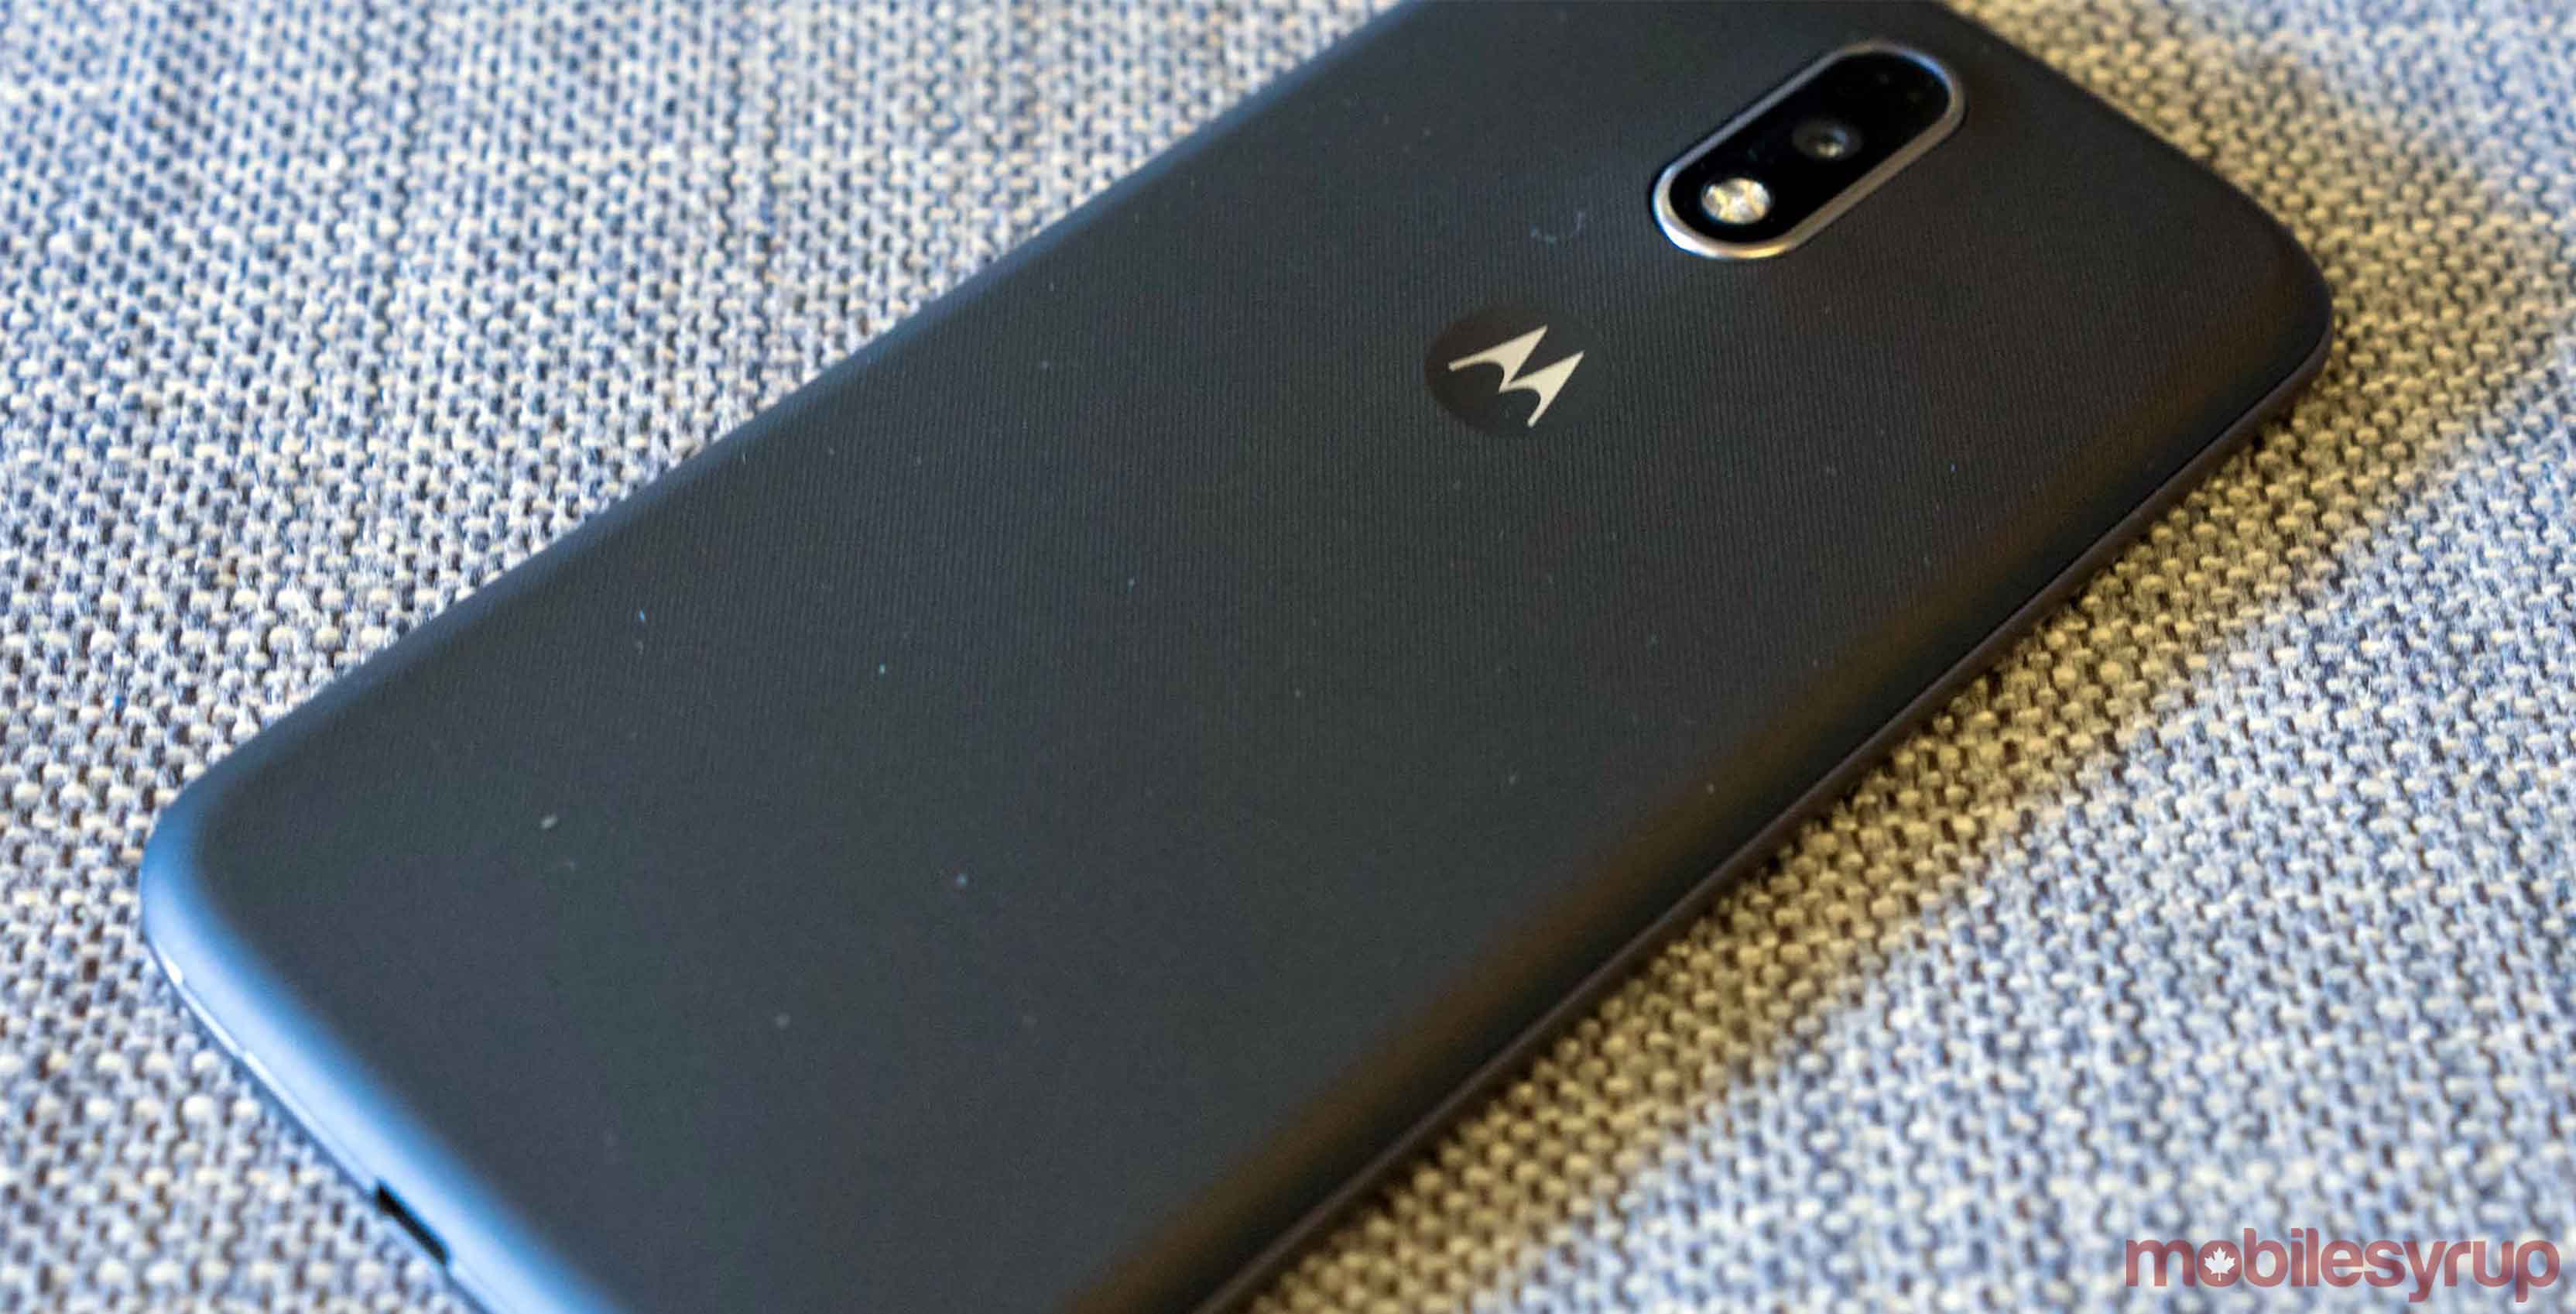 Photo of Motorola's Moto G4 Plus smarphone